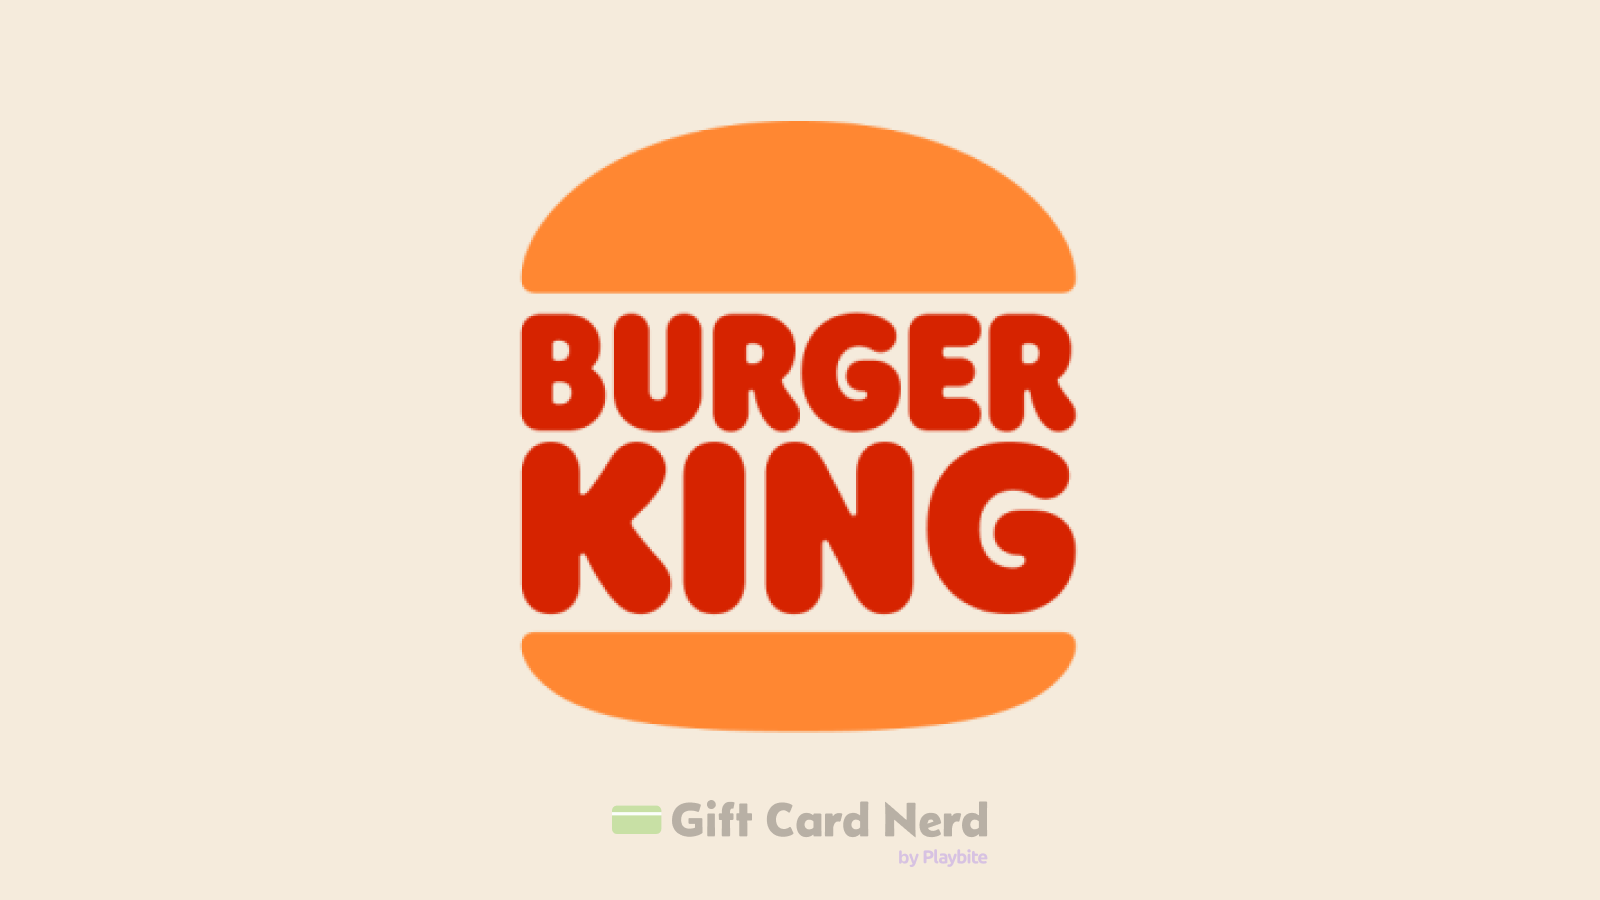 Can I Use a Burger King Gift Card on Grubhub?